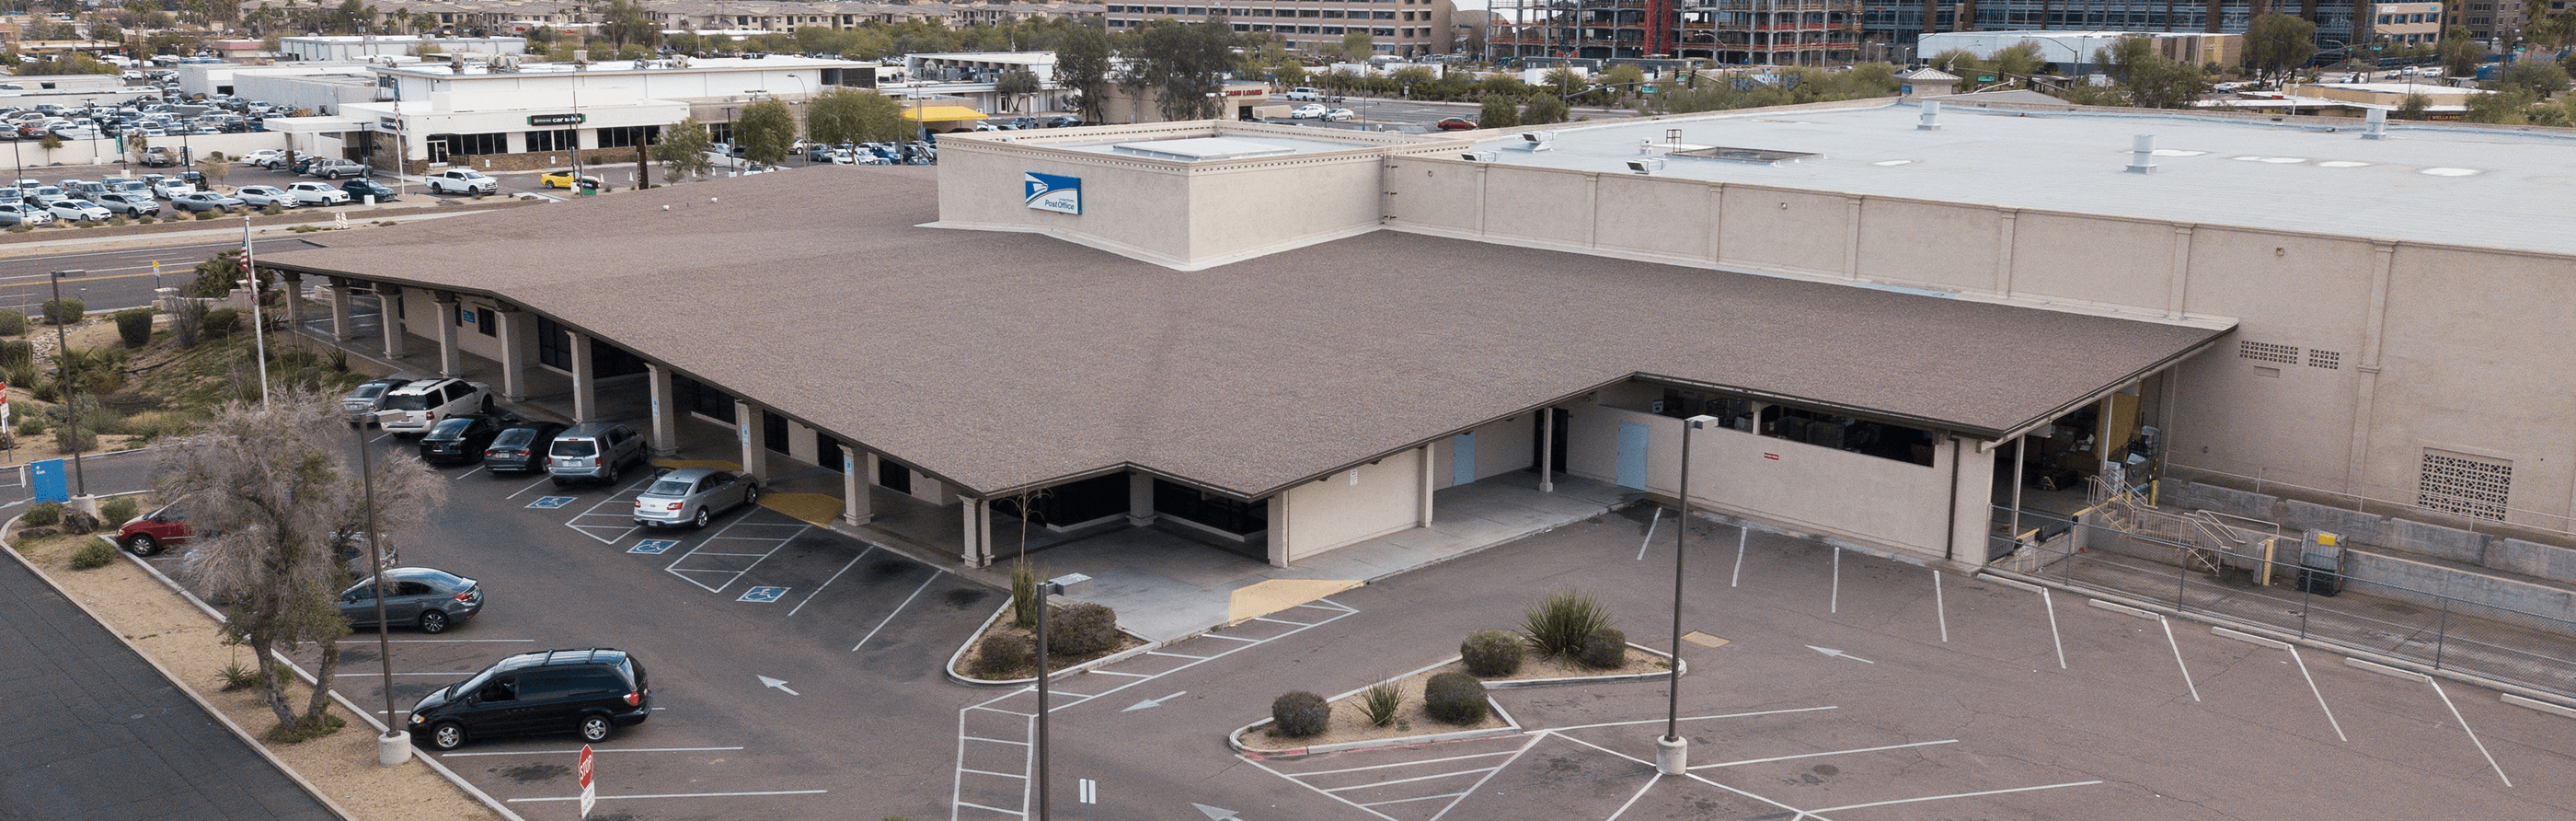 Scottsdale Main Post Office